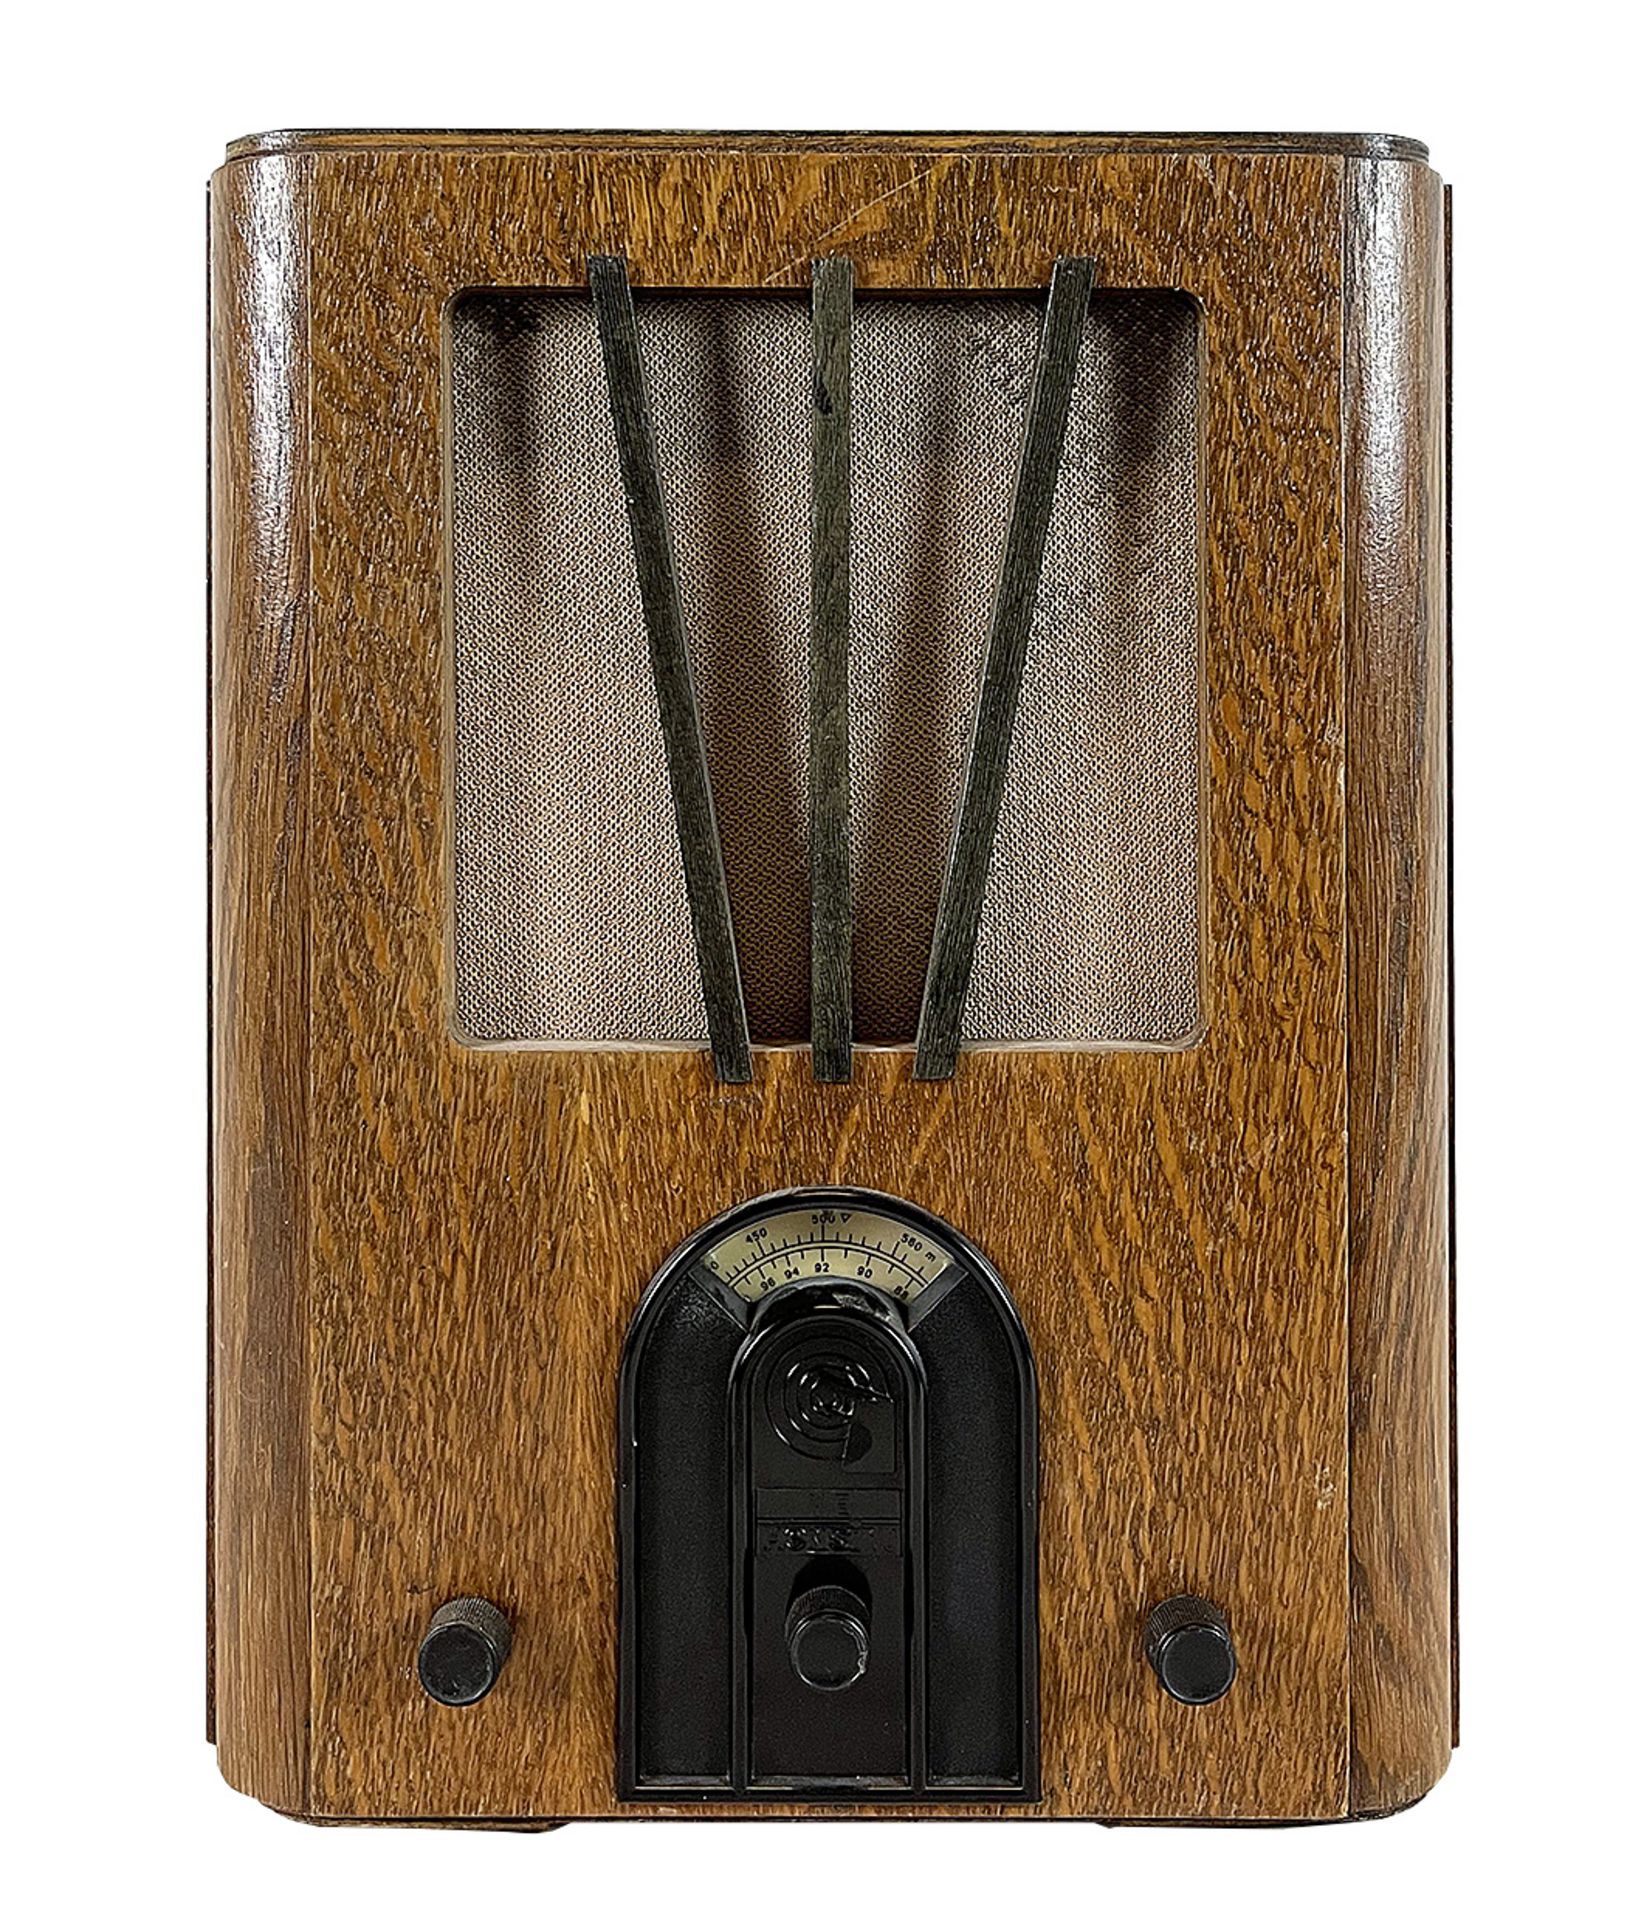 Early Crosley Model 51 Radio, ca. 1924, USA